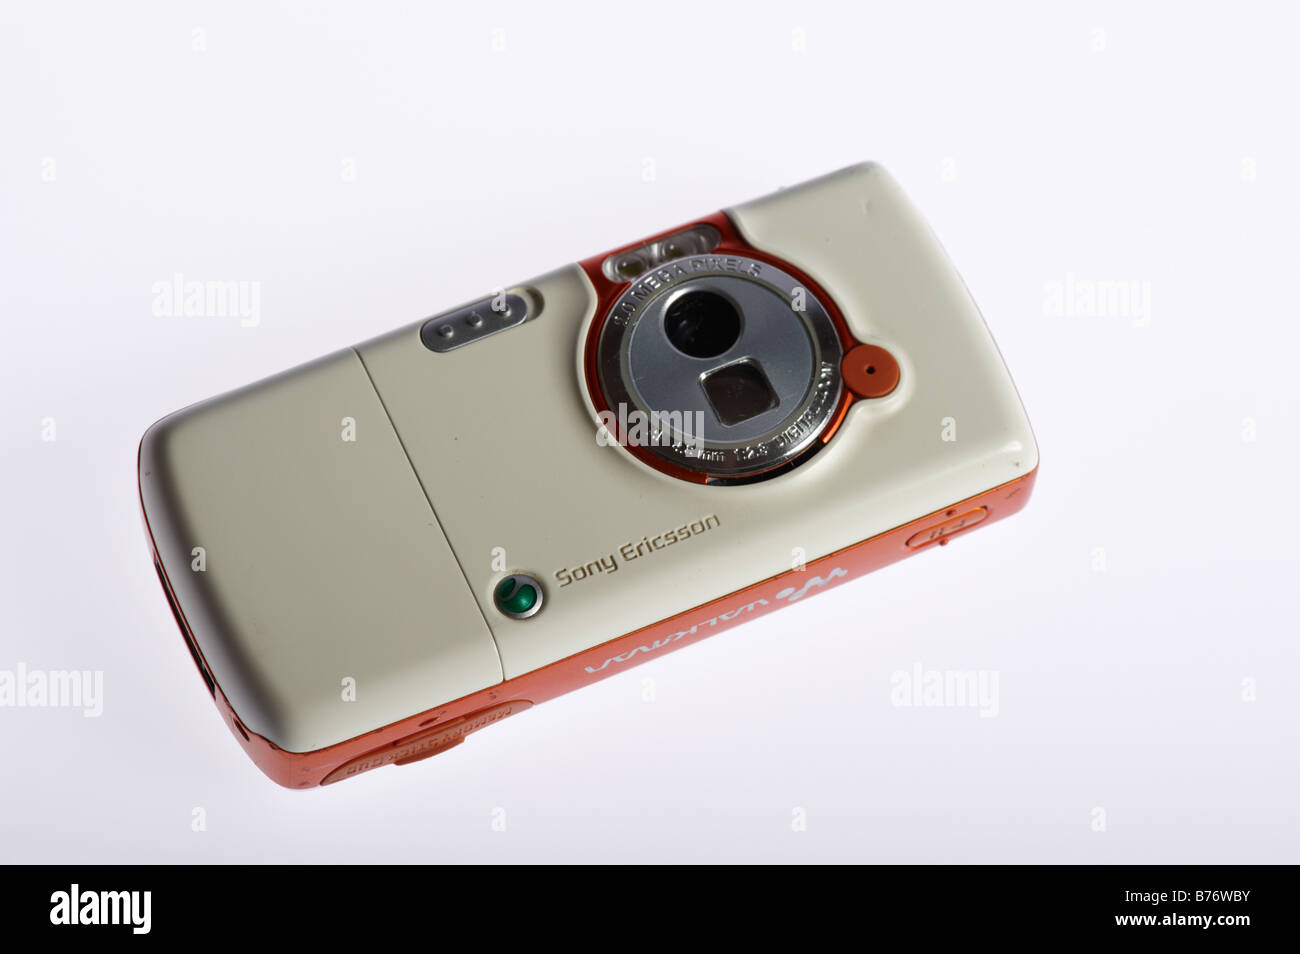 camera mobile phone Sony Ericsson Stock Photo - Alamy